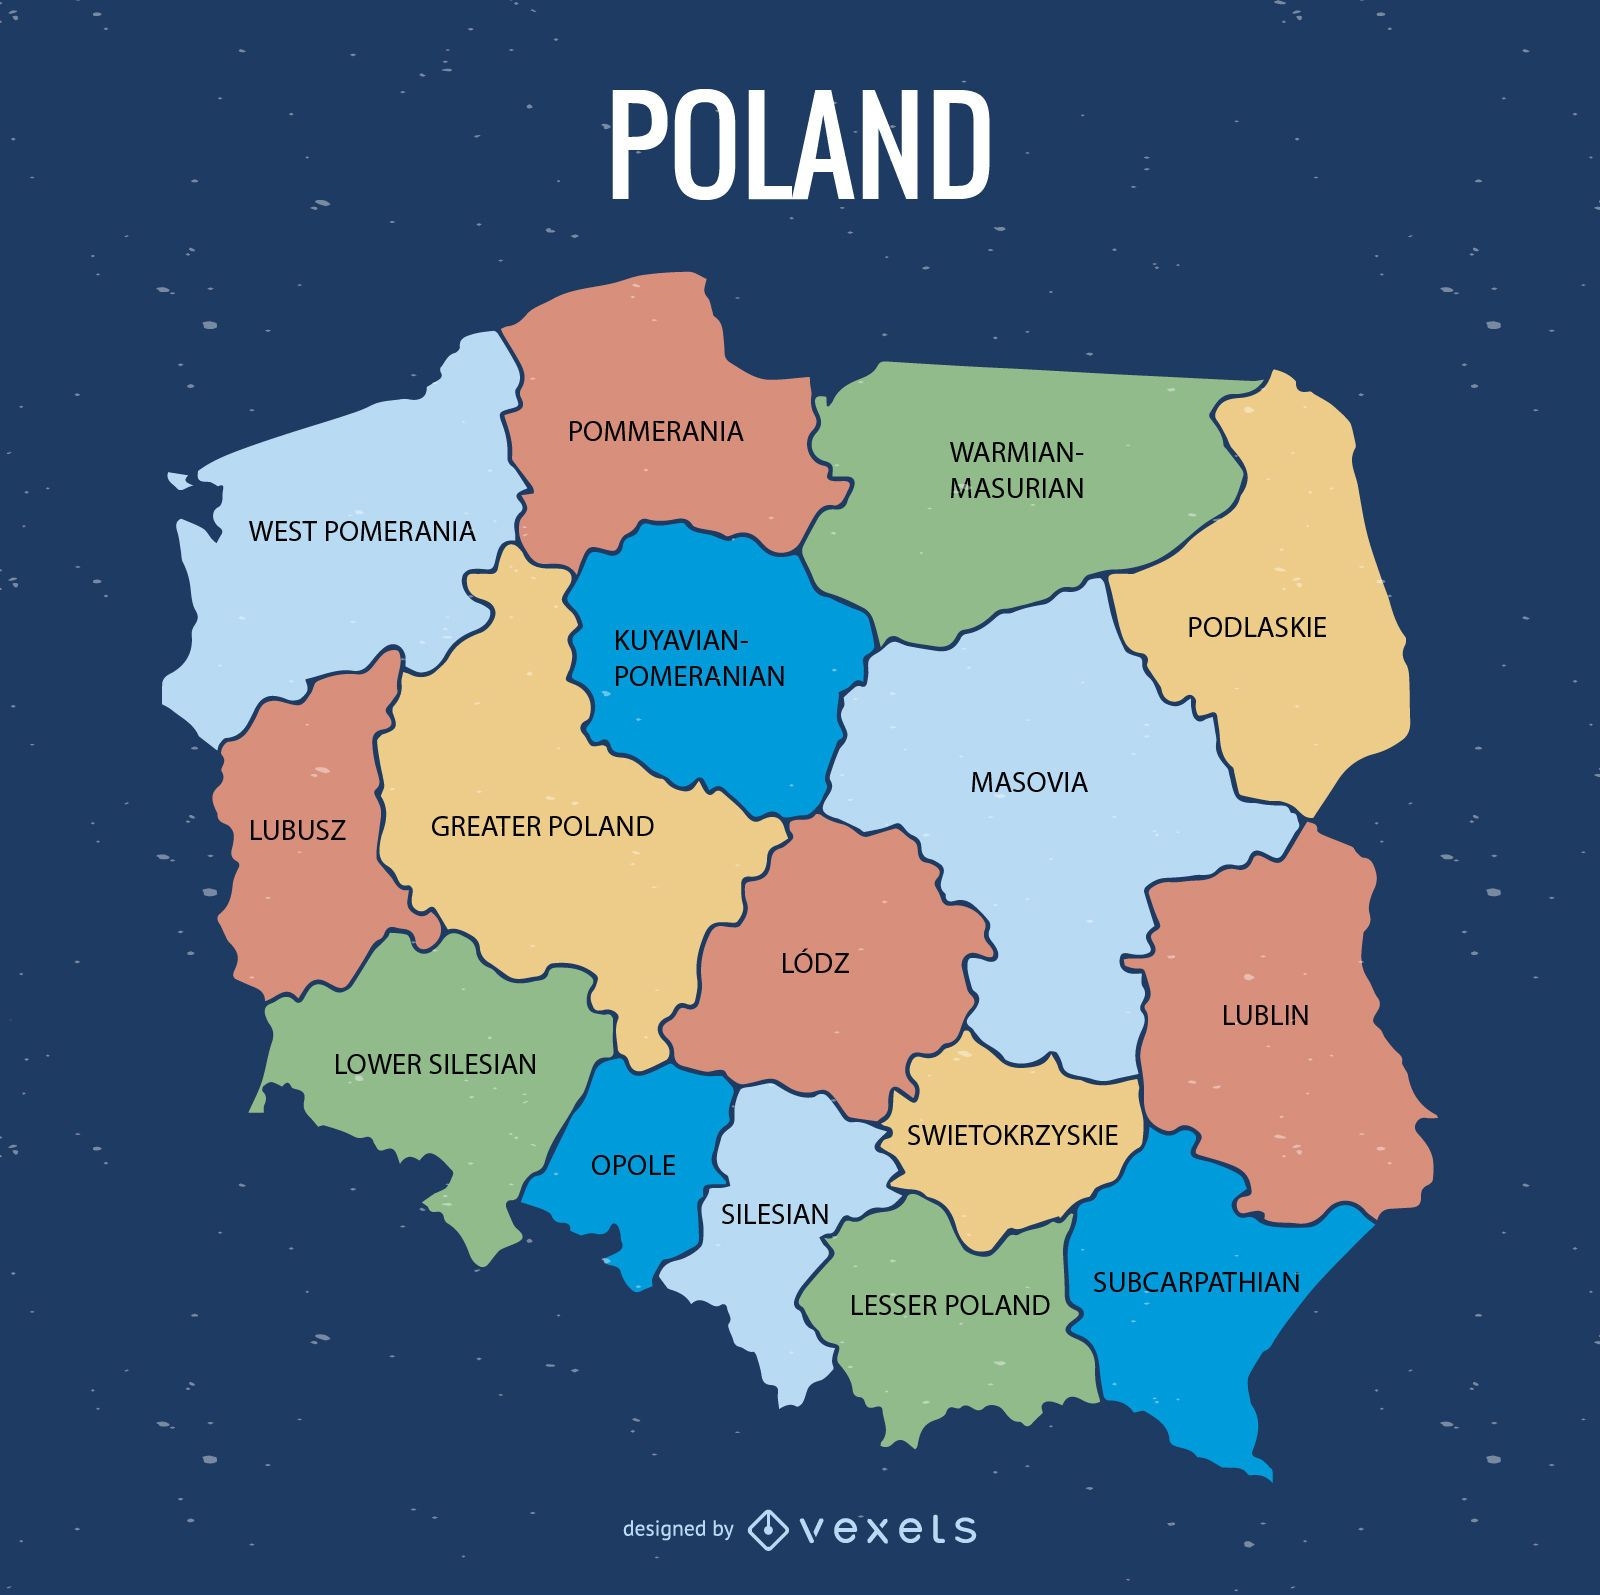 Poland administrative division map